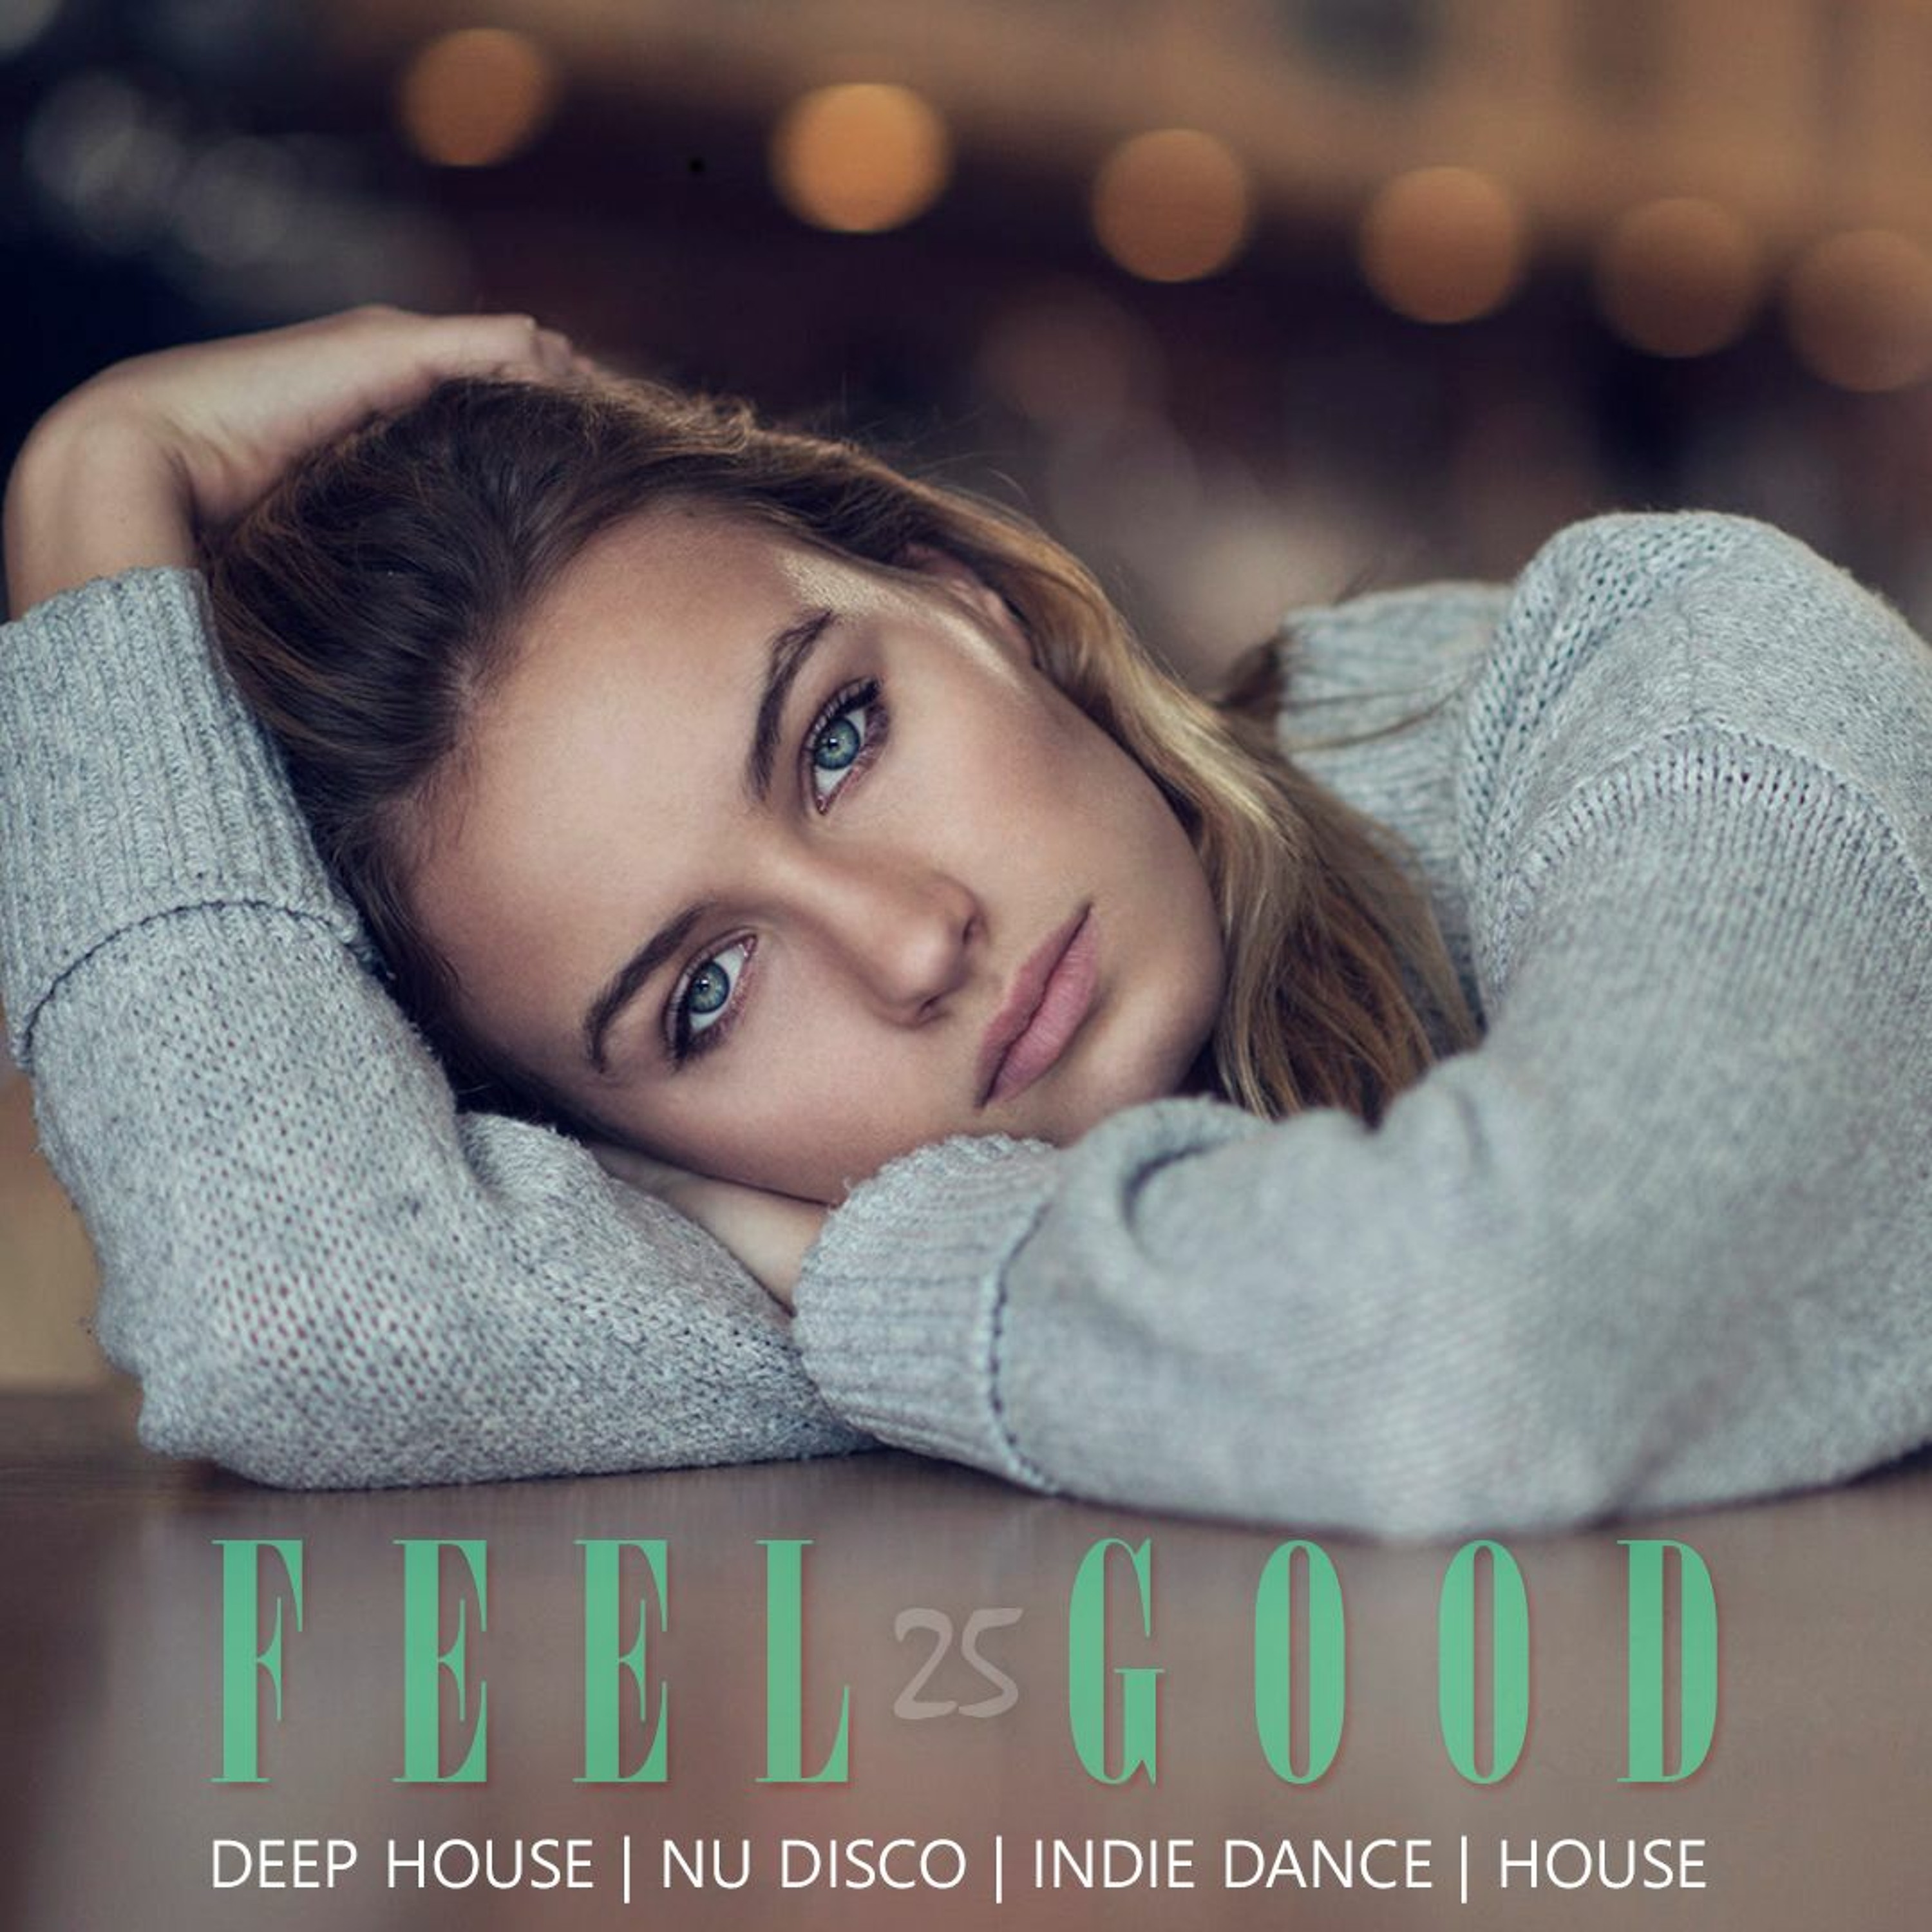 Feel Good - 025 Deep House Set 2019 #VFG25